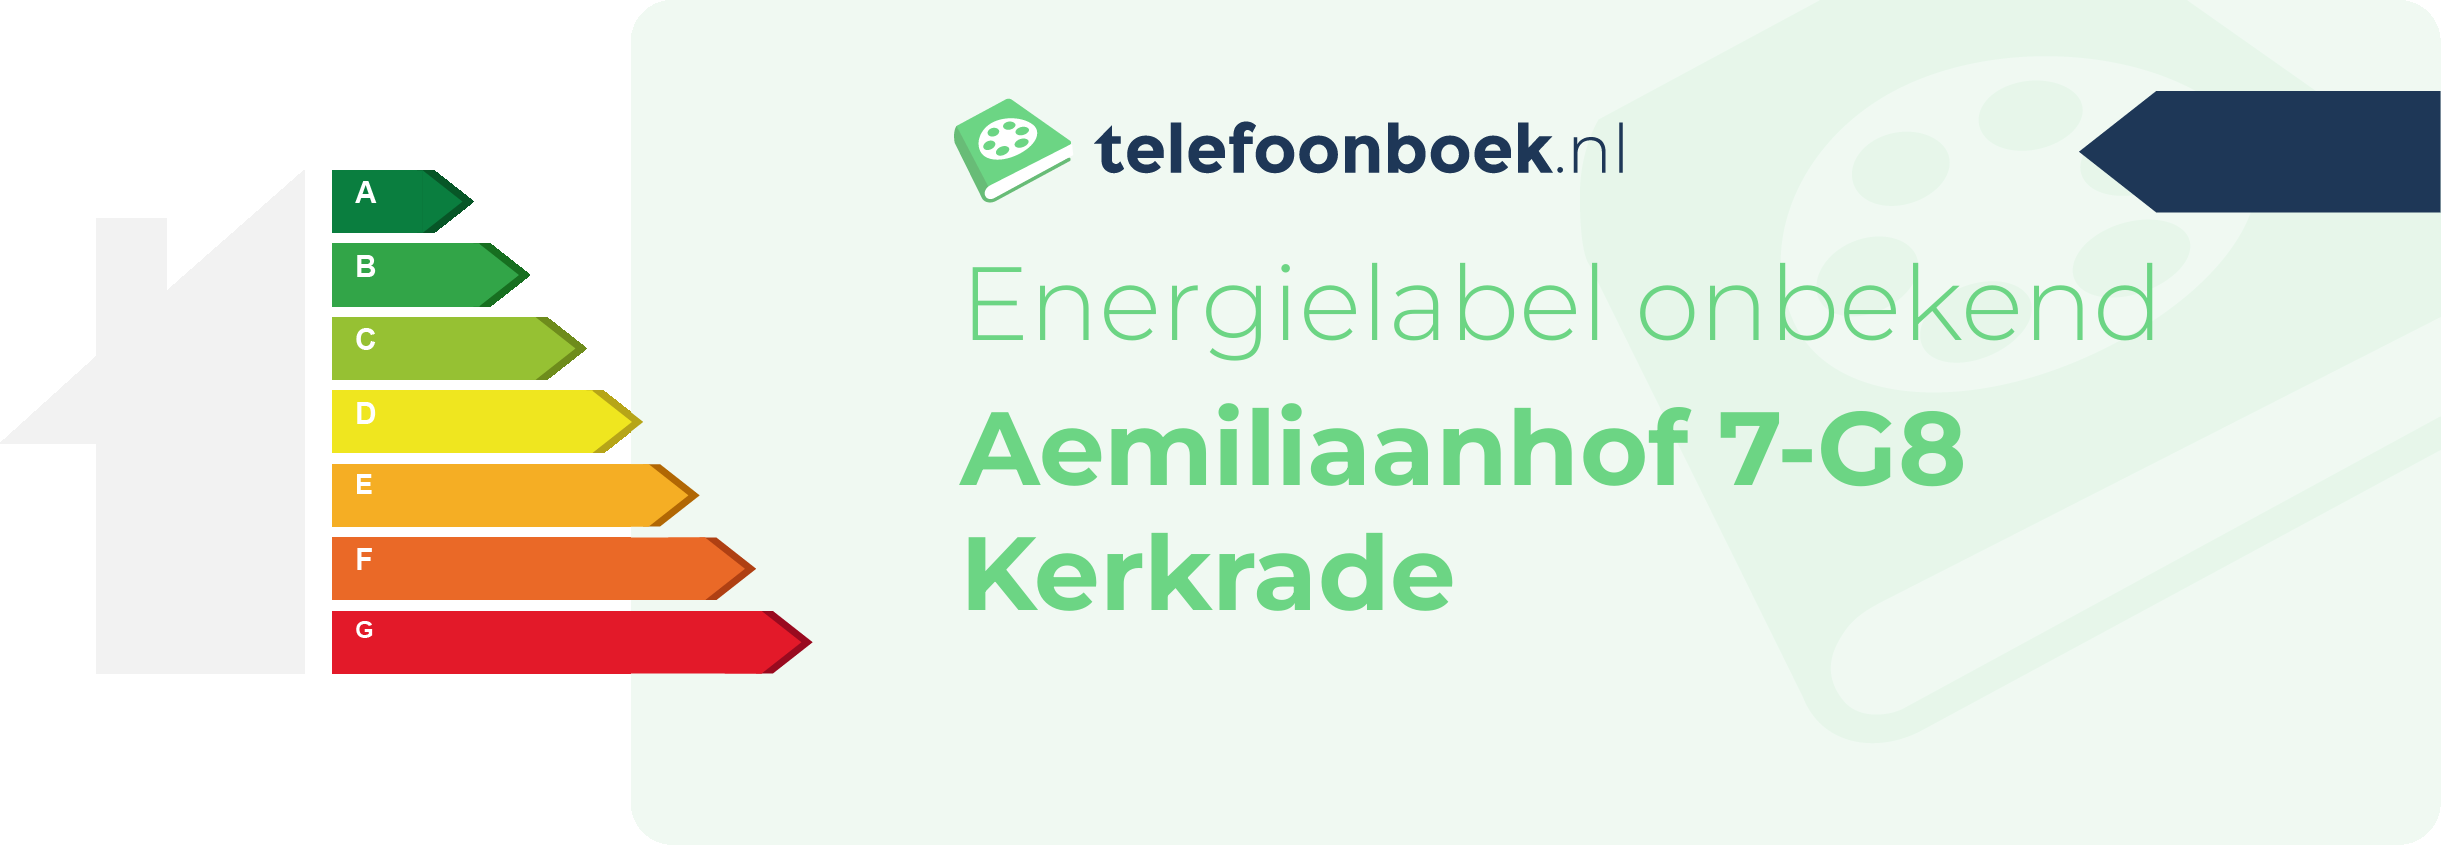 Energielabel Aemiliaanhof 7-G8 Kerkrade